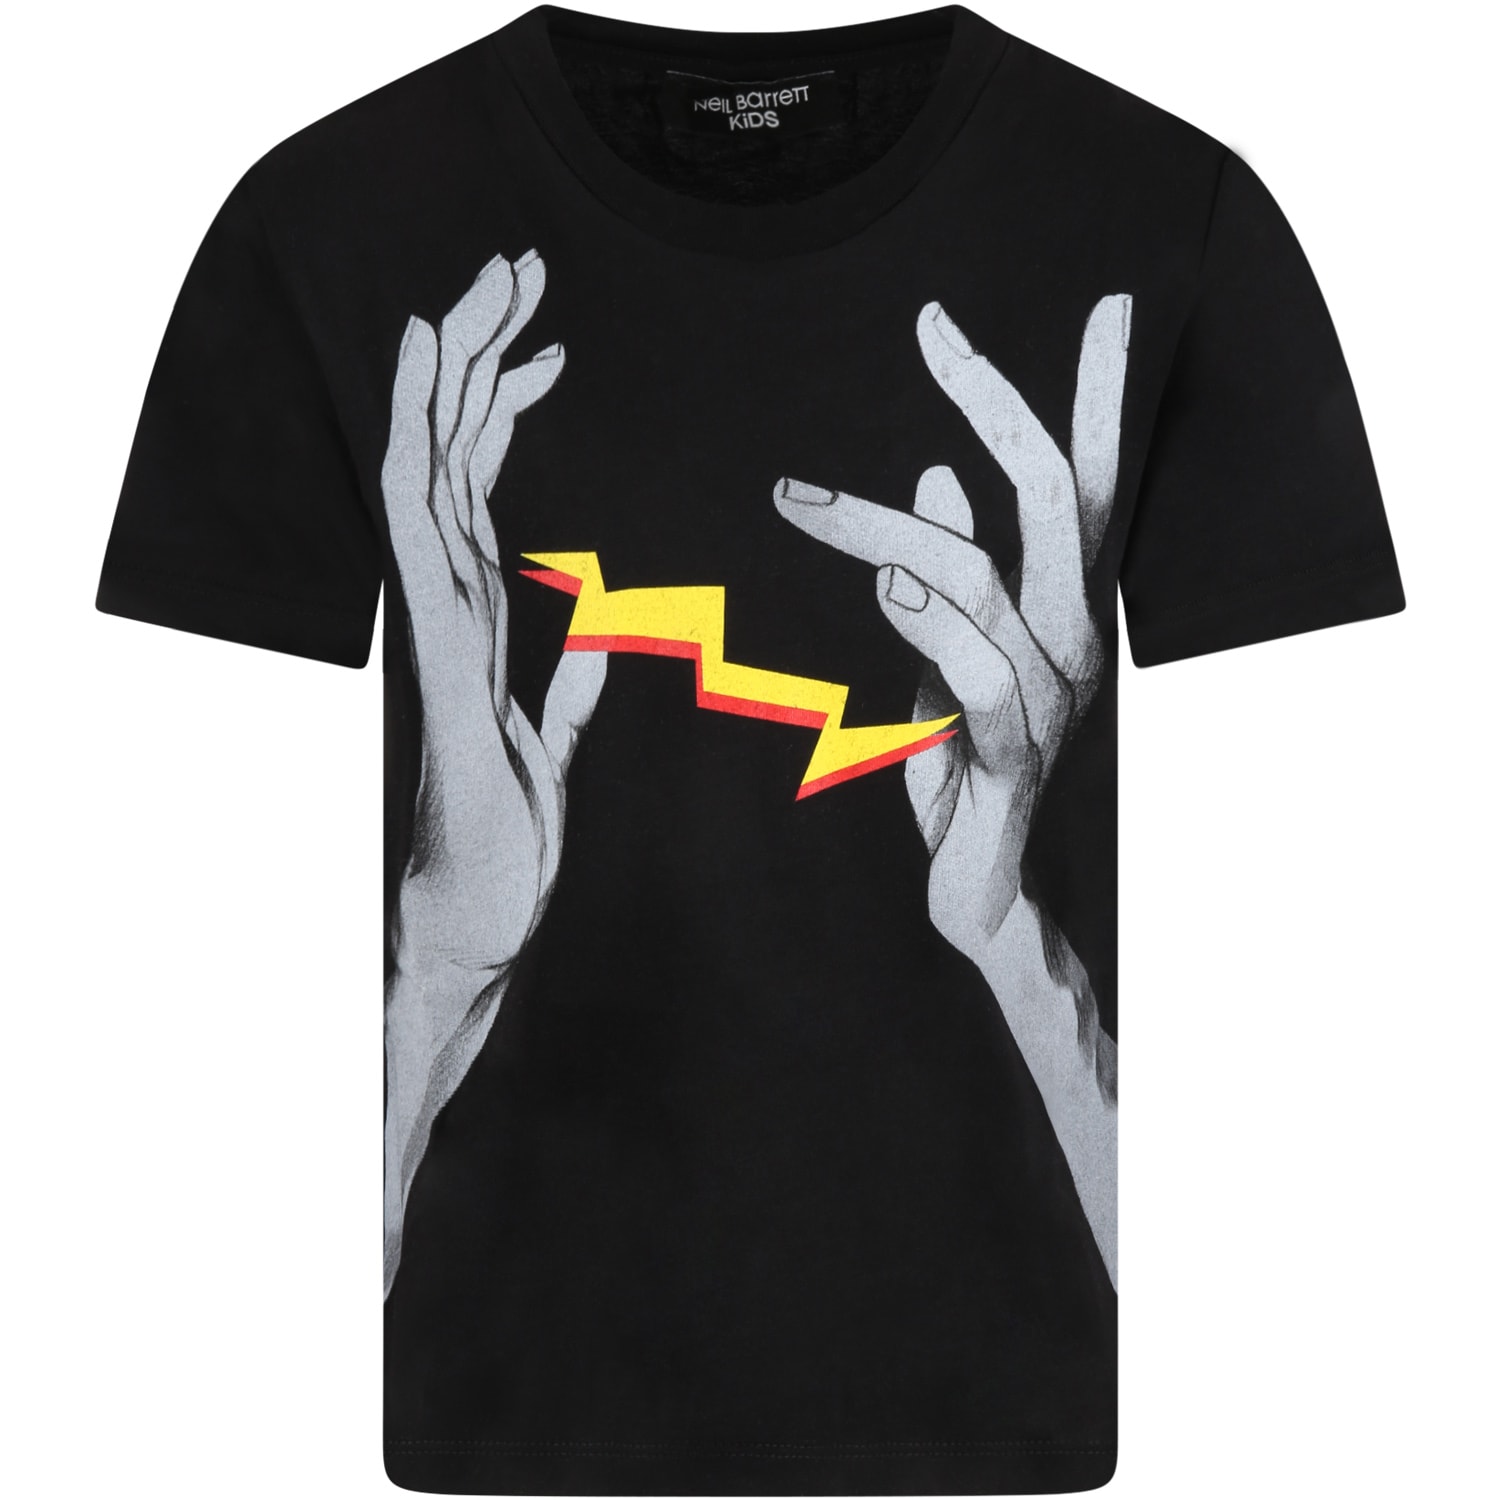 Neil Barrett Black T-shirt For Boy With Hands